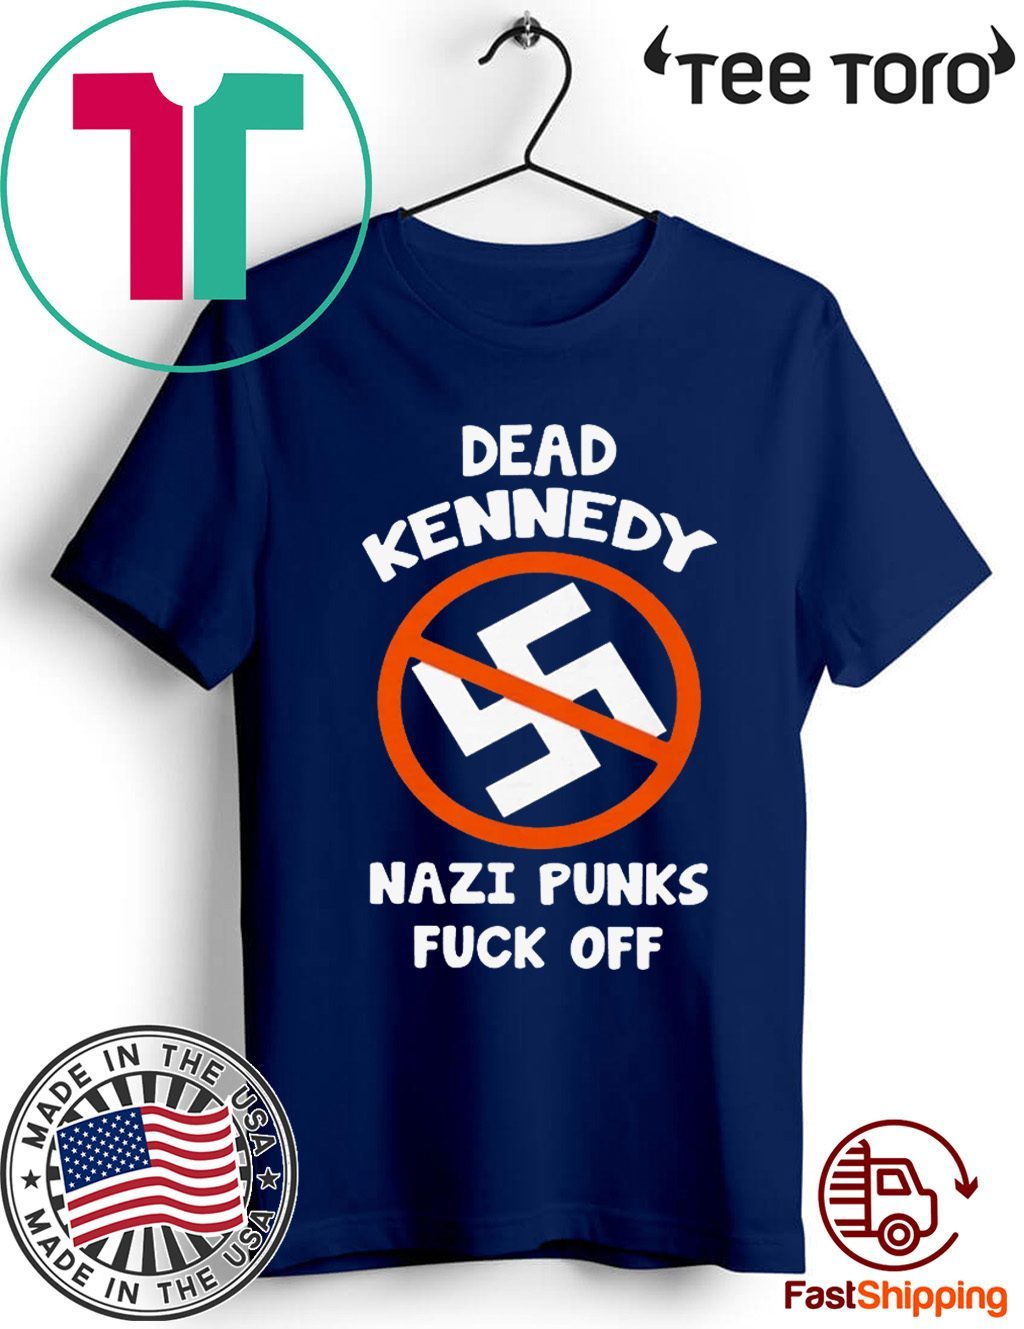 DEAD KENNEDY NAZI PUNKS FUCK OFF OFFCIAL T-SHIRT - ReviewsTees